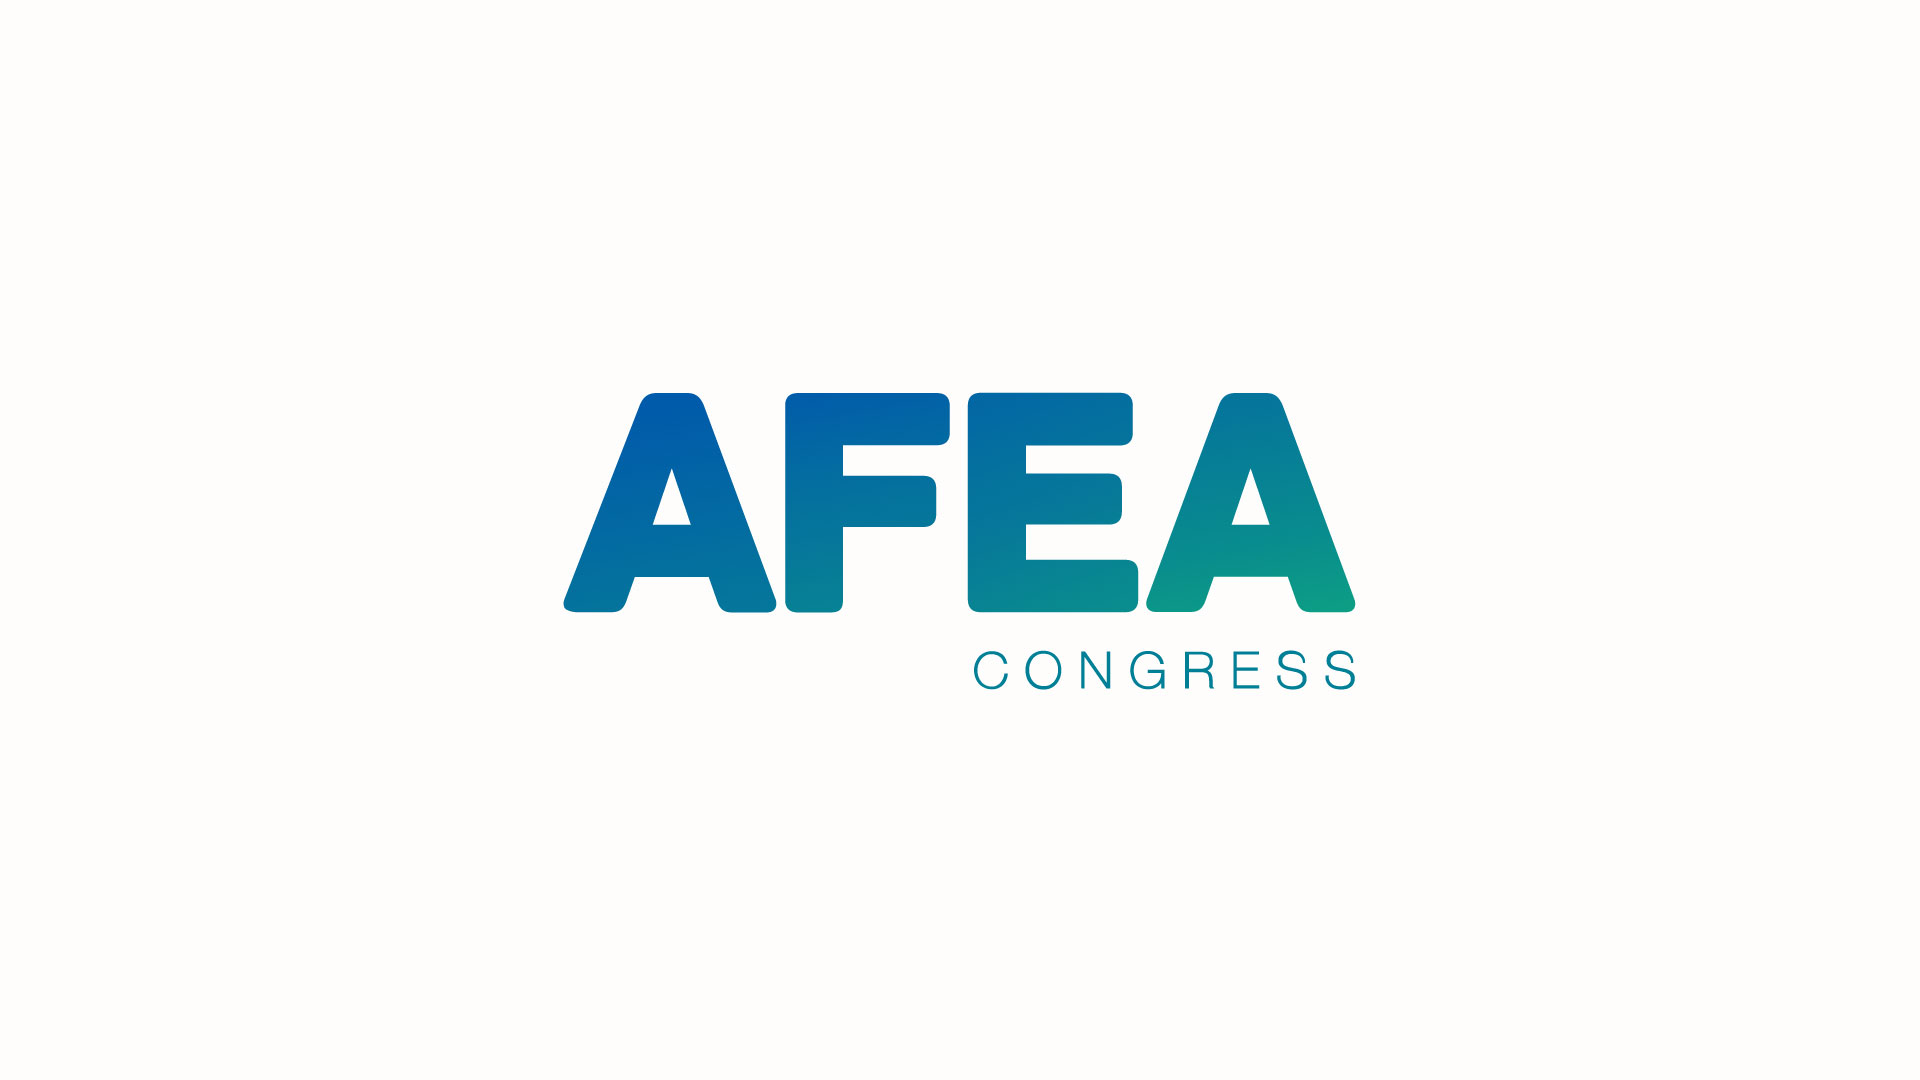 A new era for AFEA Congress